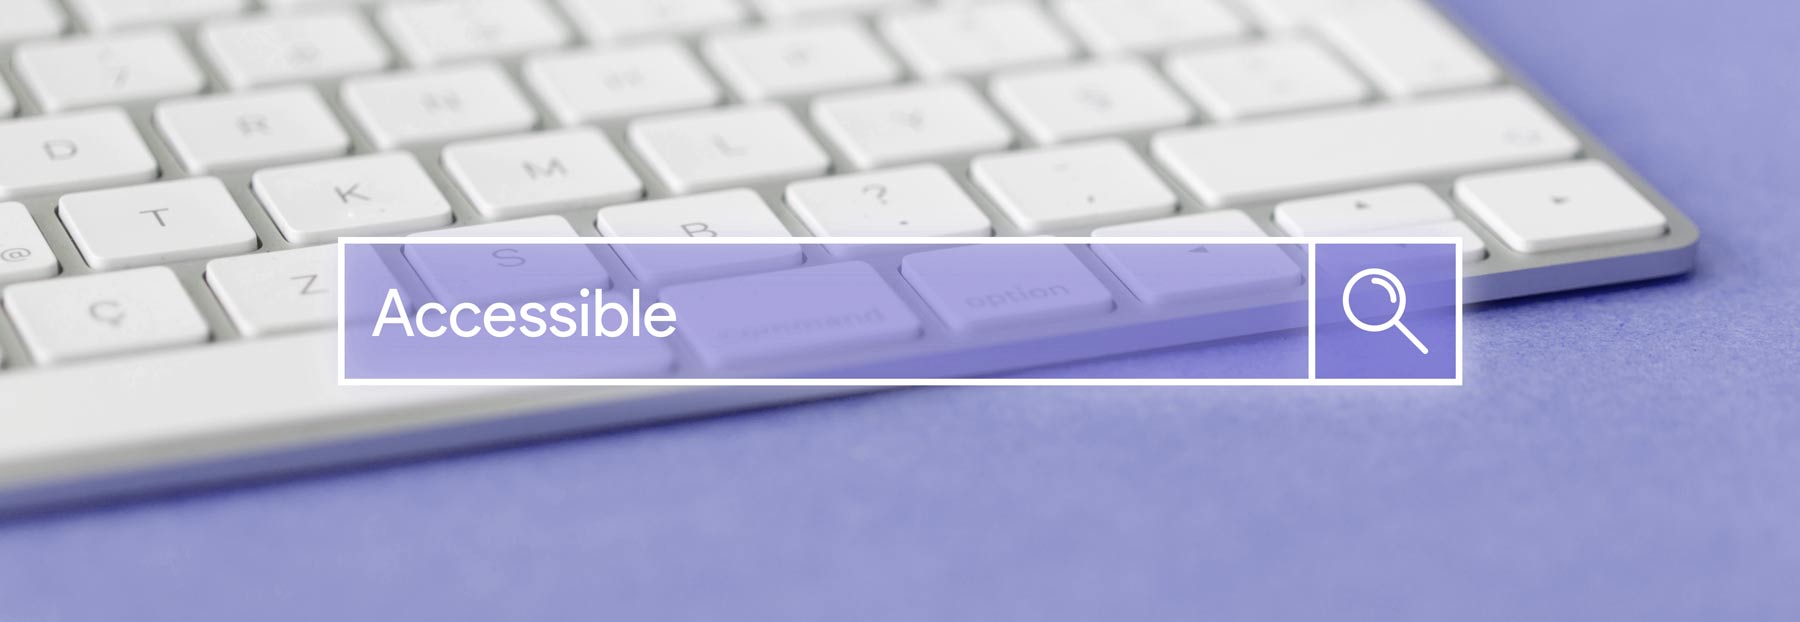 keyboard-Accessible-search-bar-purple